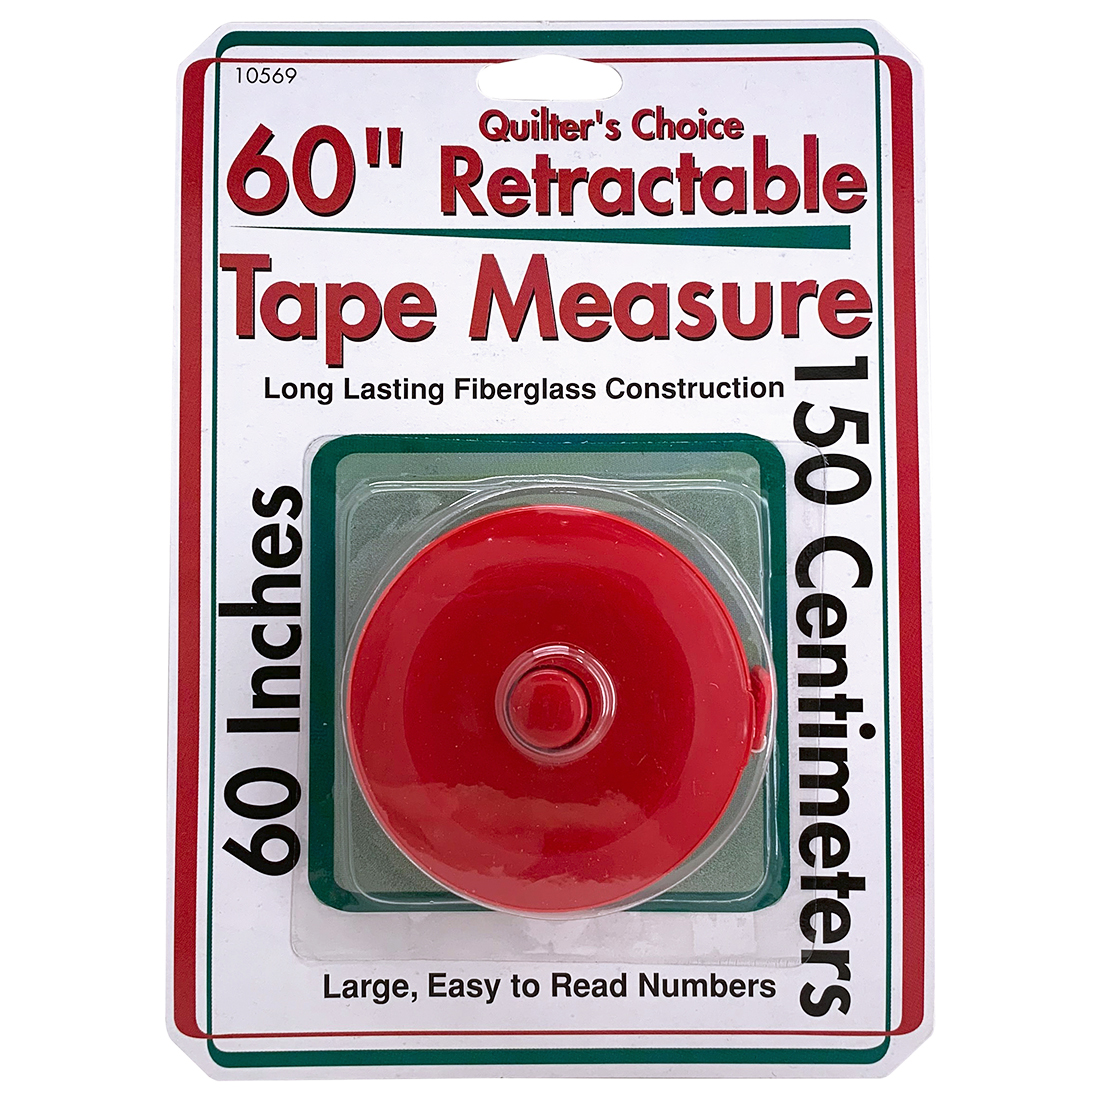 60 Fiberglass Tape Measure